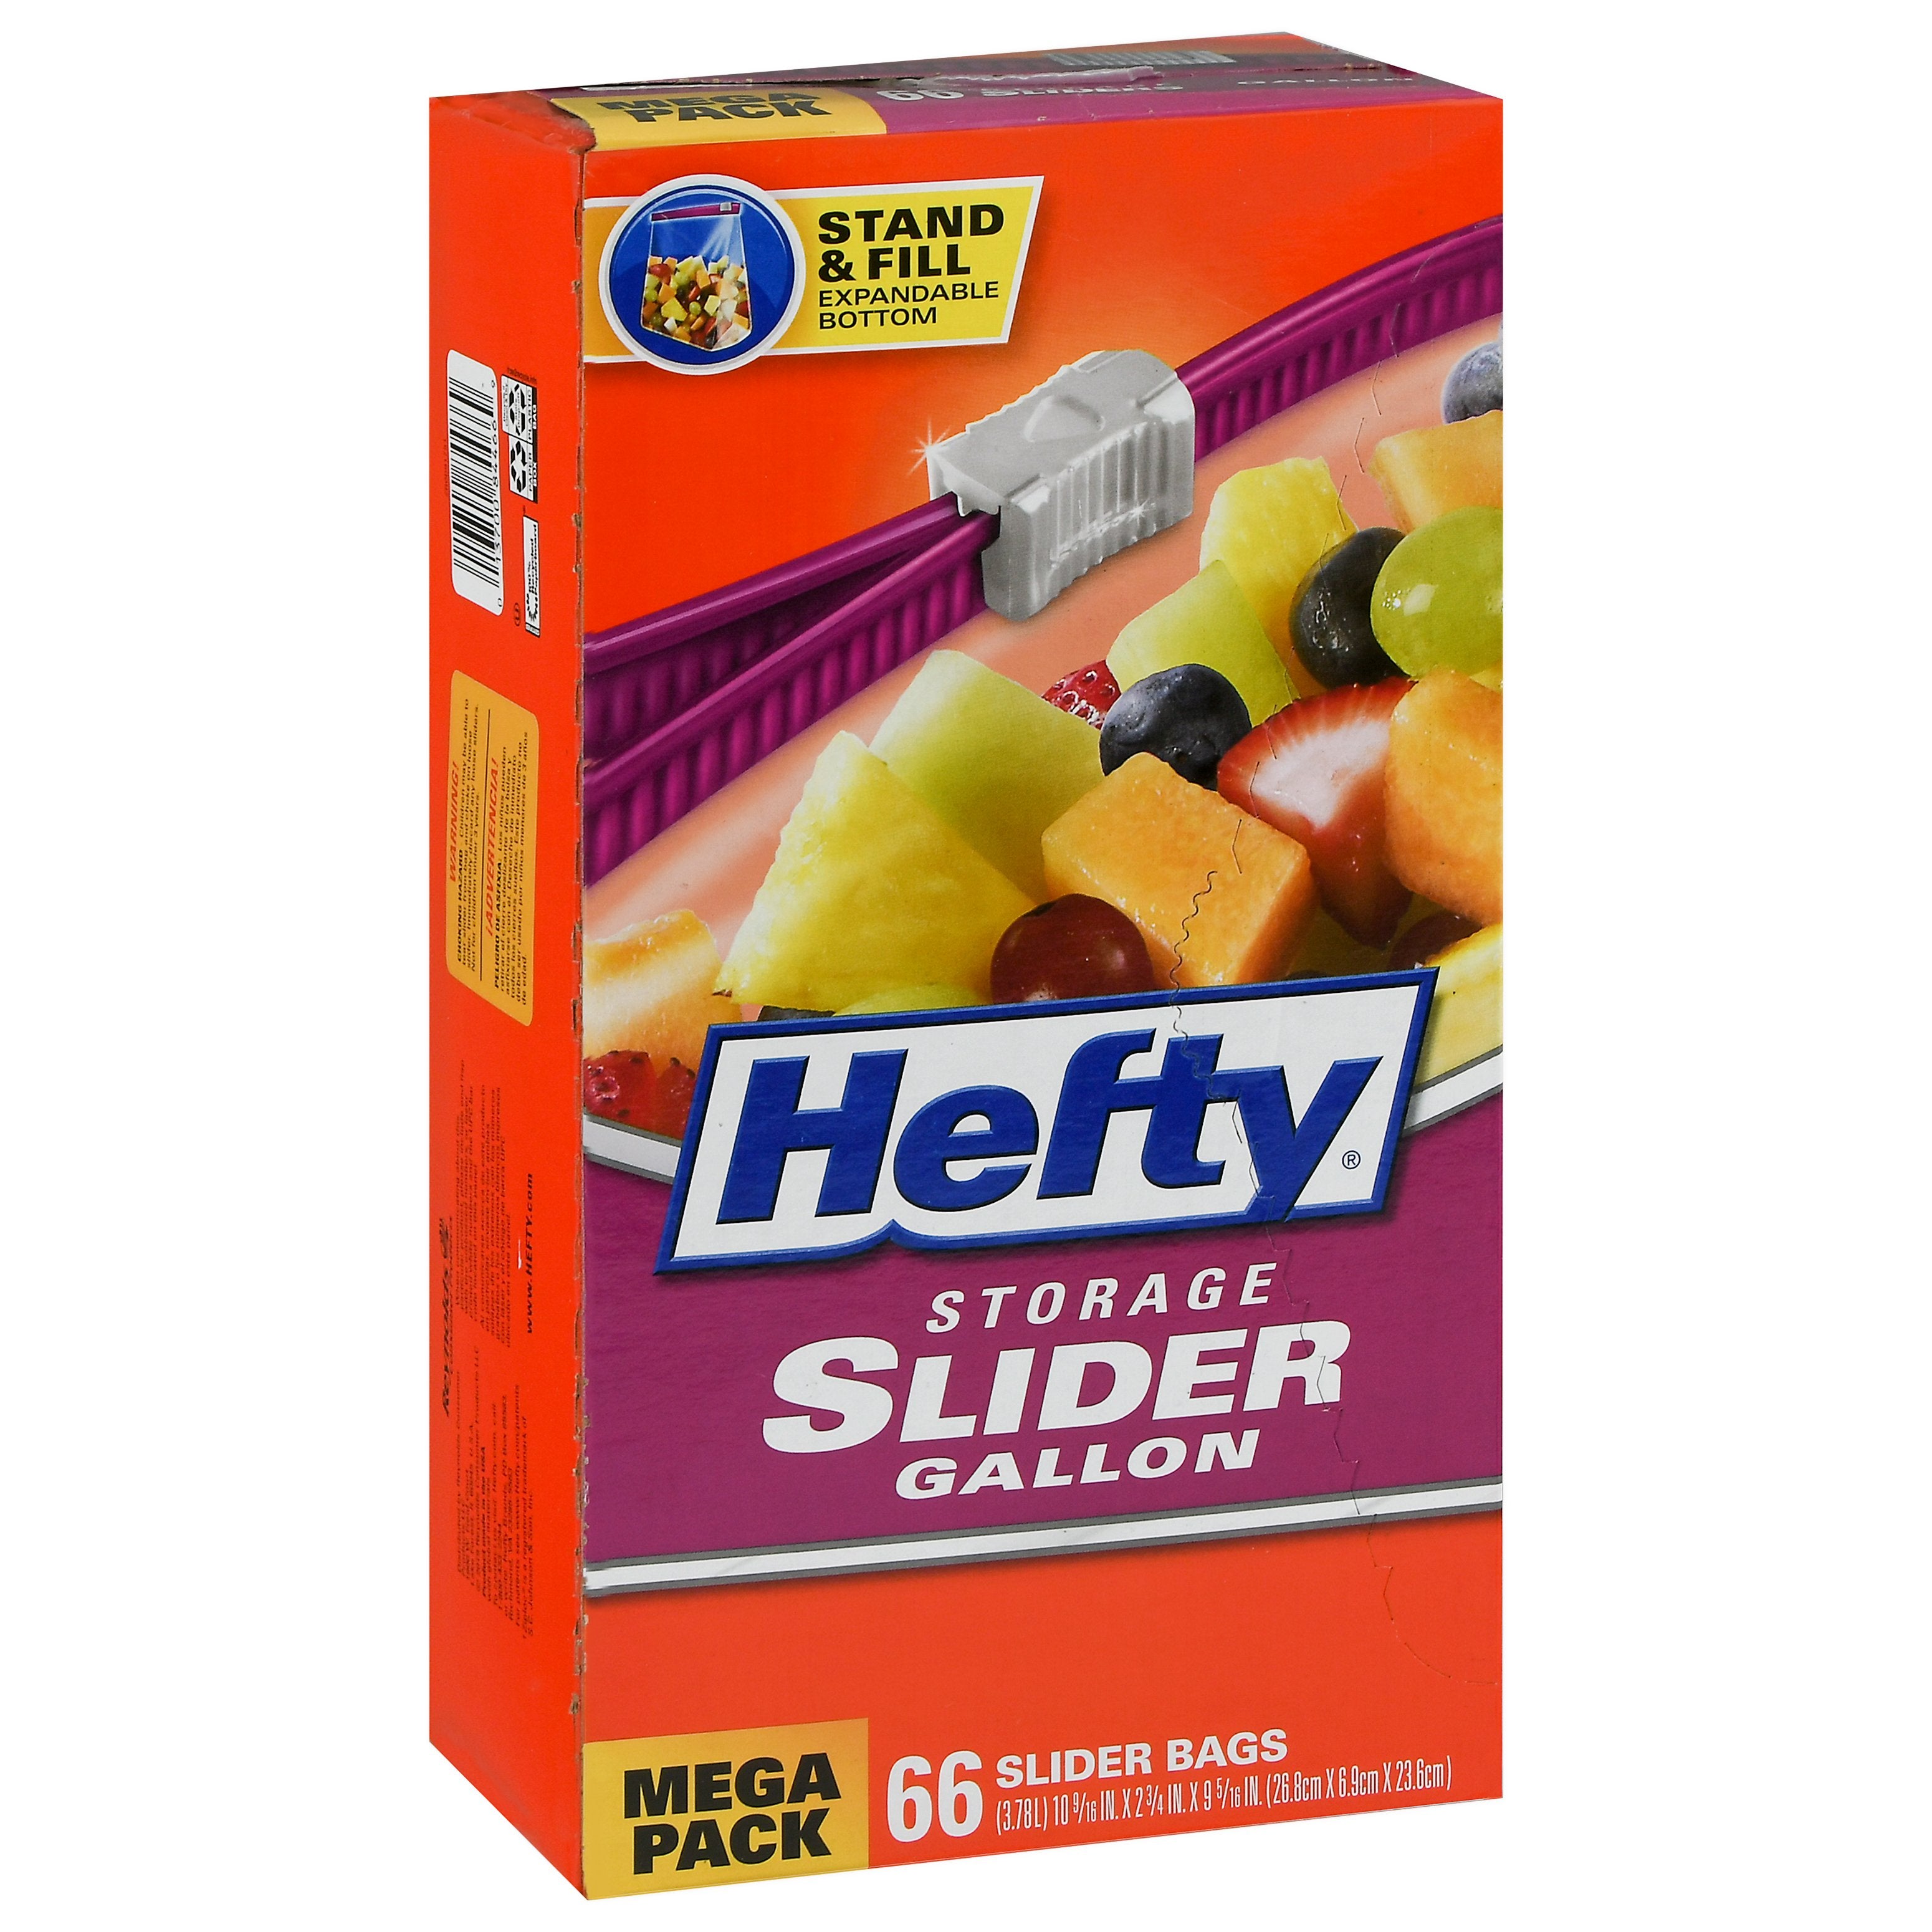 Hefty Slider Gallon Storage Bags - 30 ct box